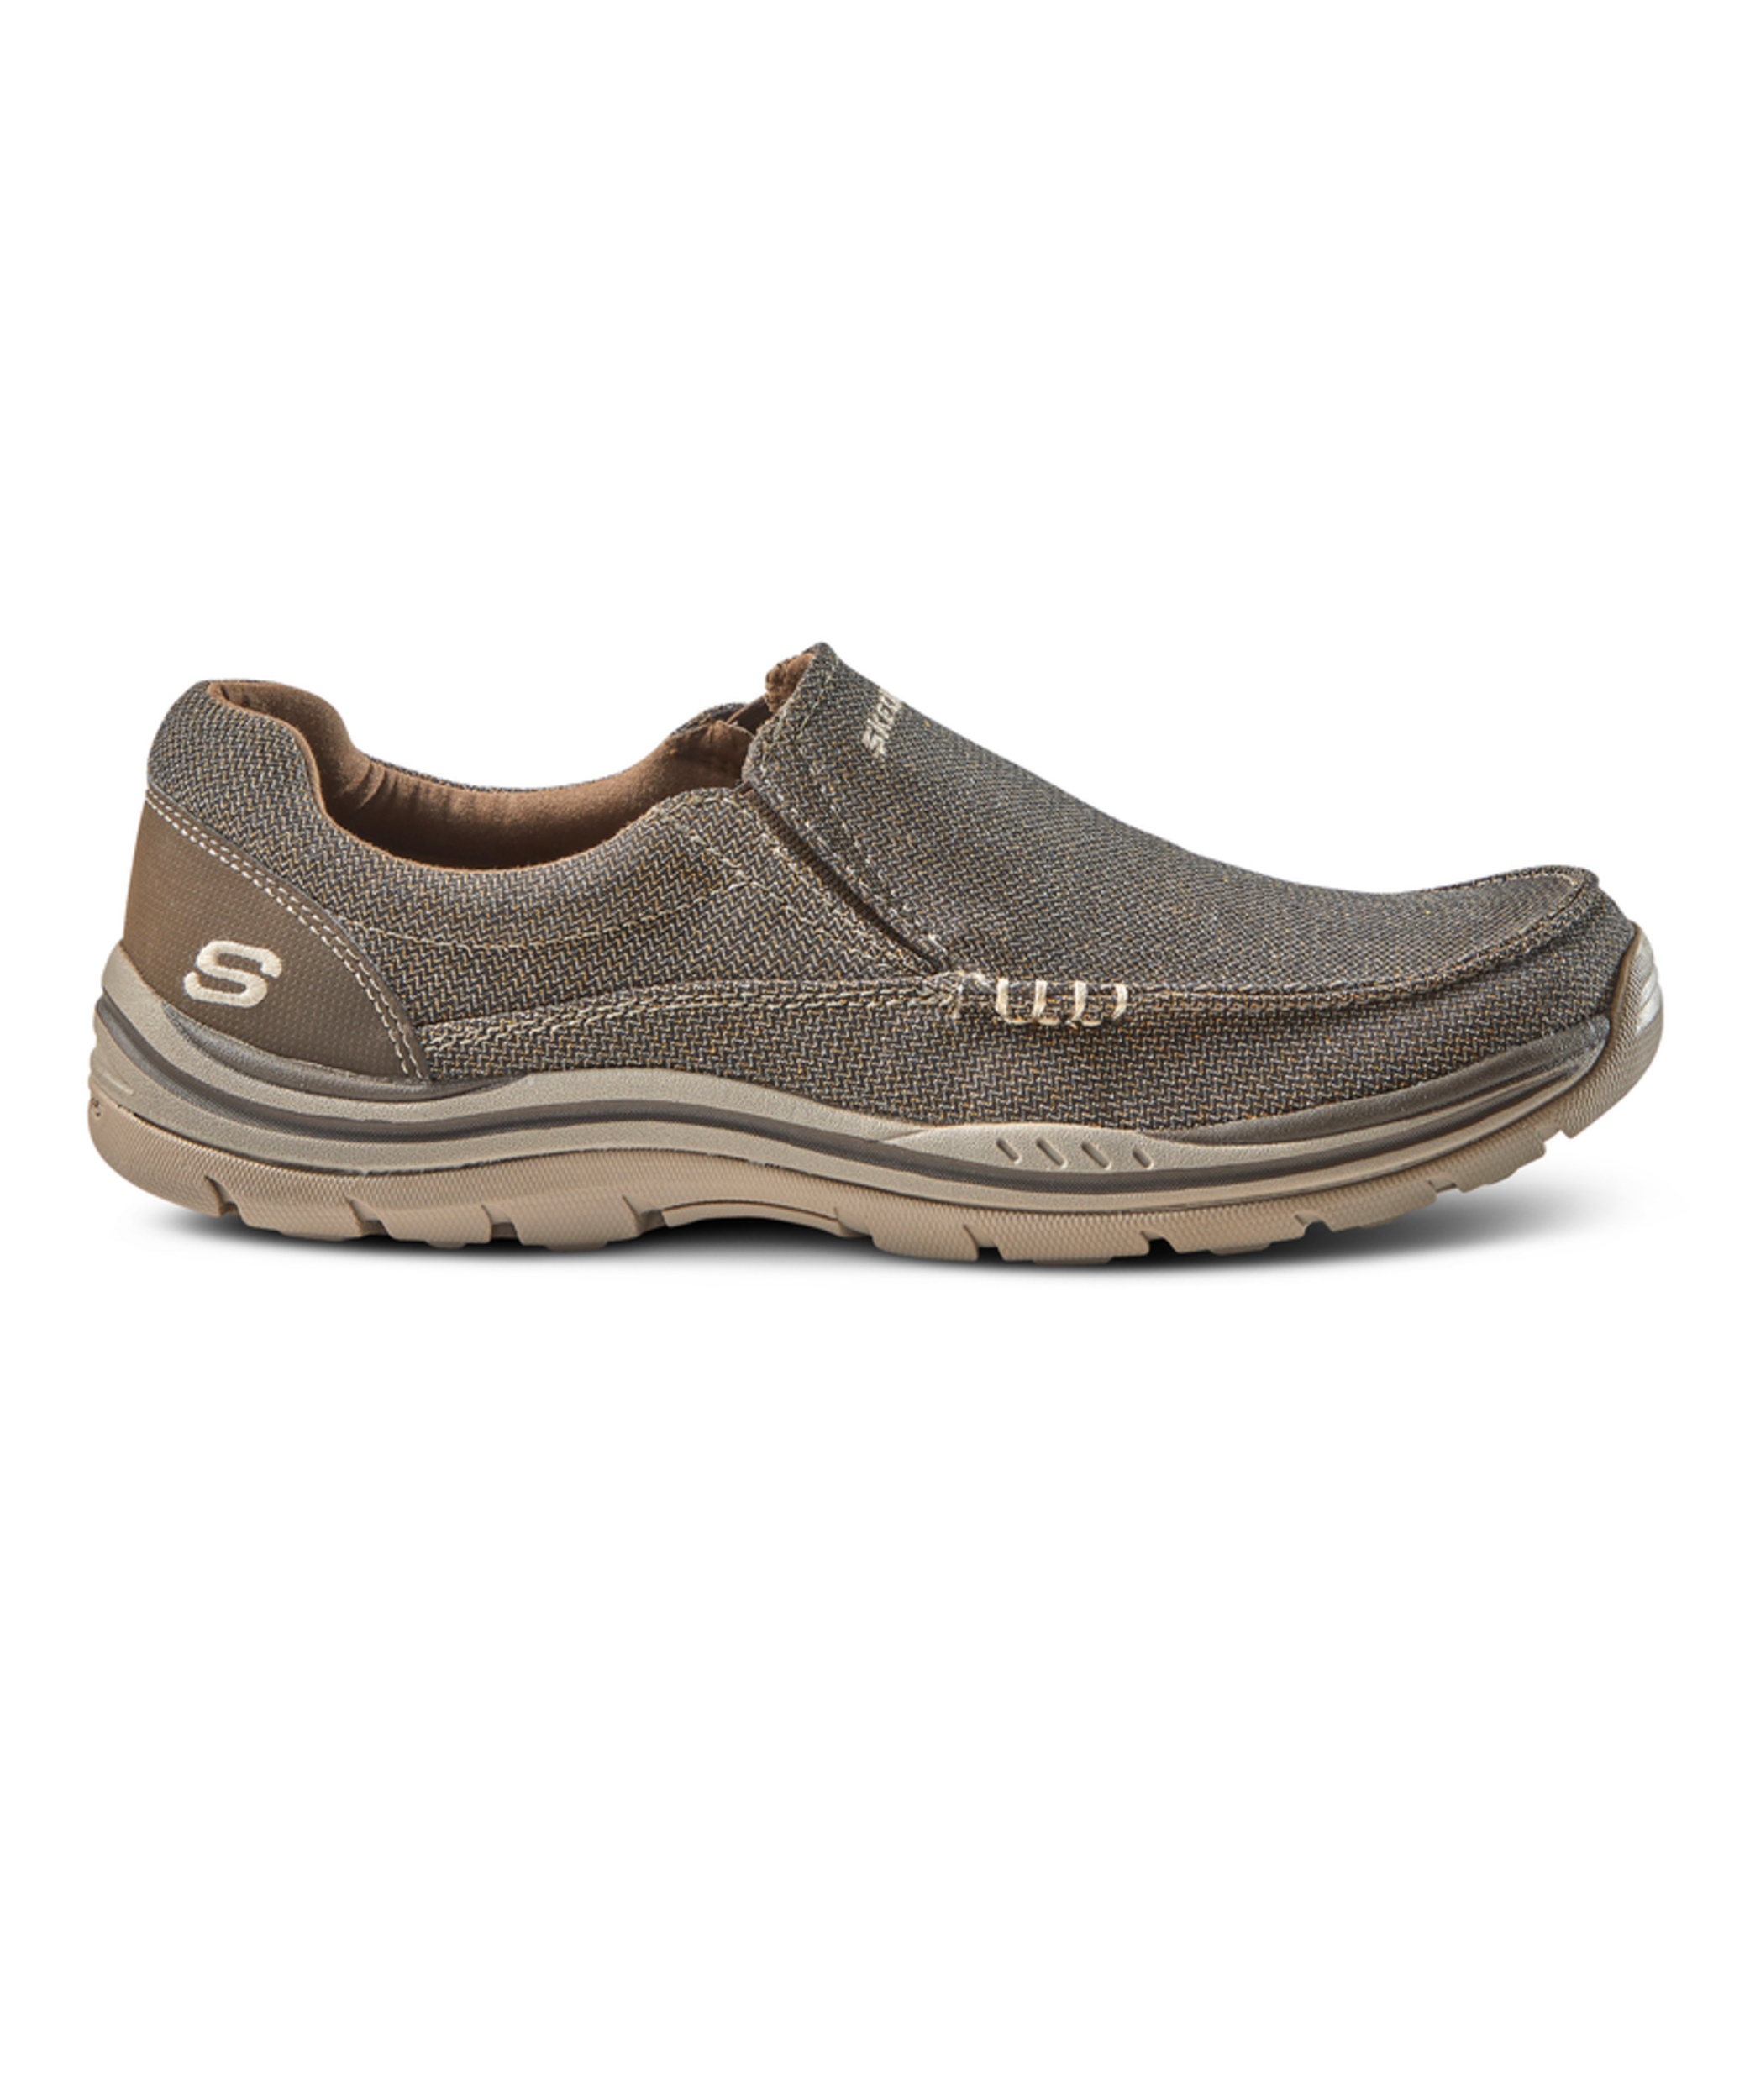 Skechers Men's Expected Avillo Relaxed Fit Slip On Shoes - Brown | Marks